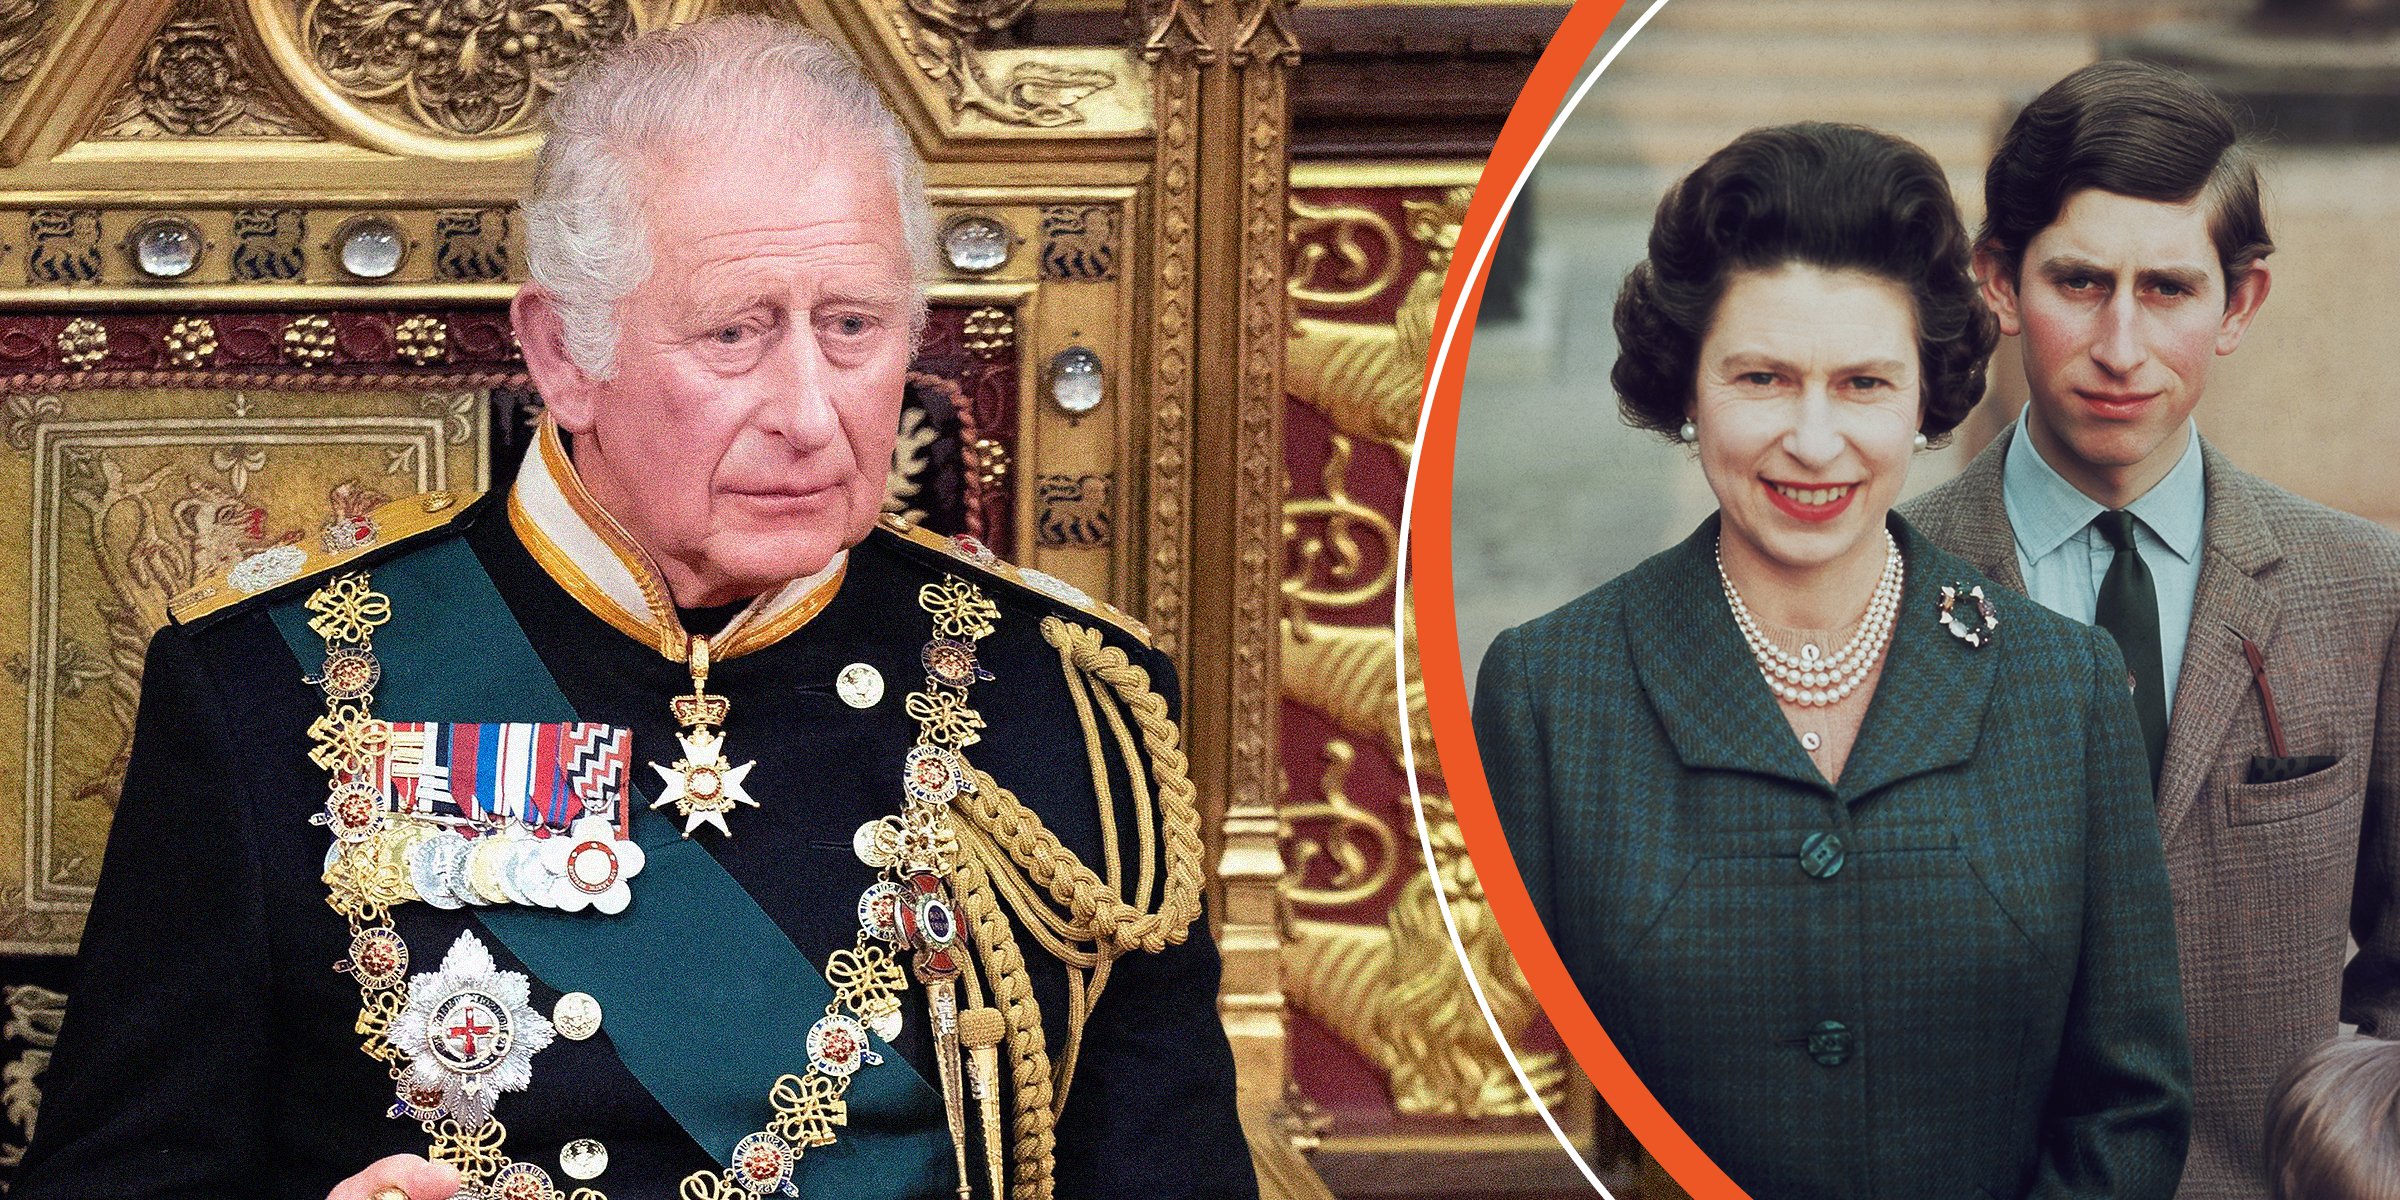 King Charles III | Queen Elizabeth II and King Charles III | Source: Getty Images